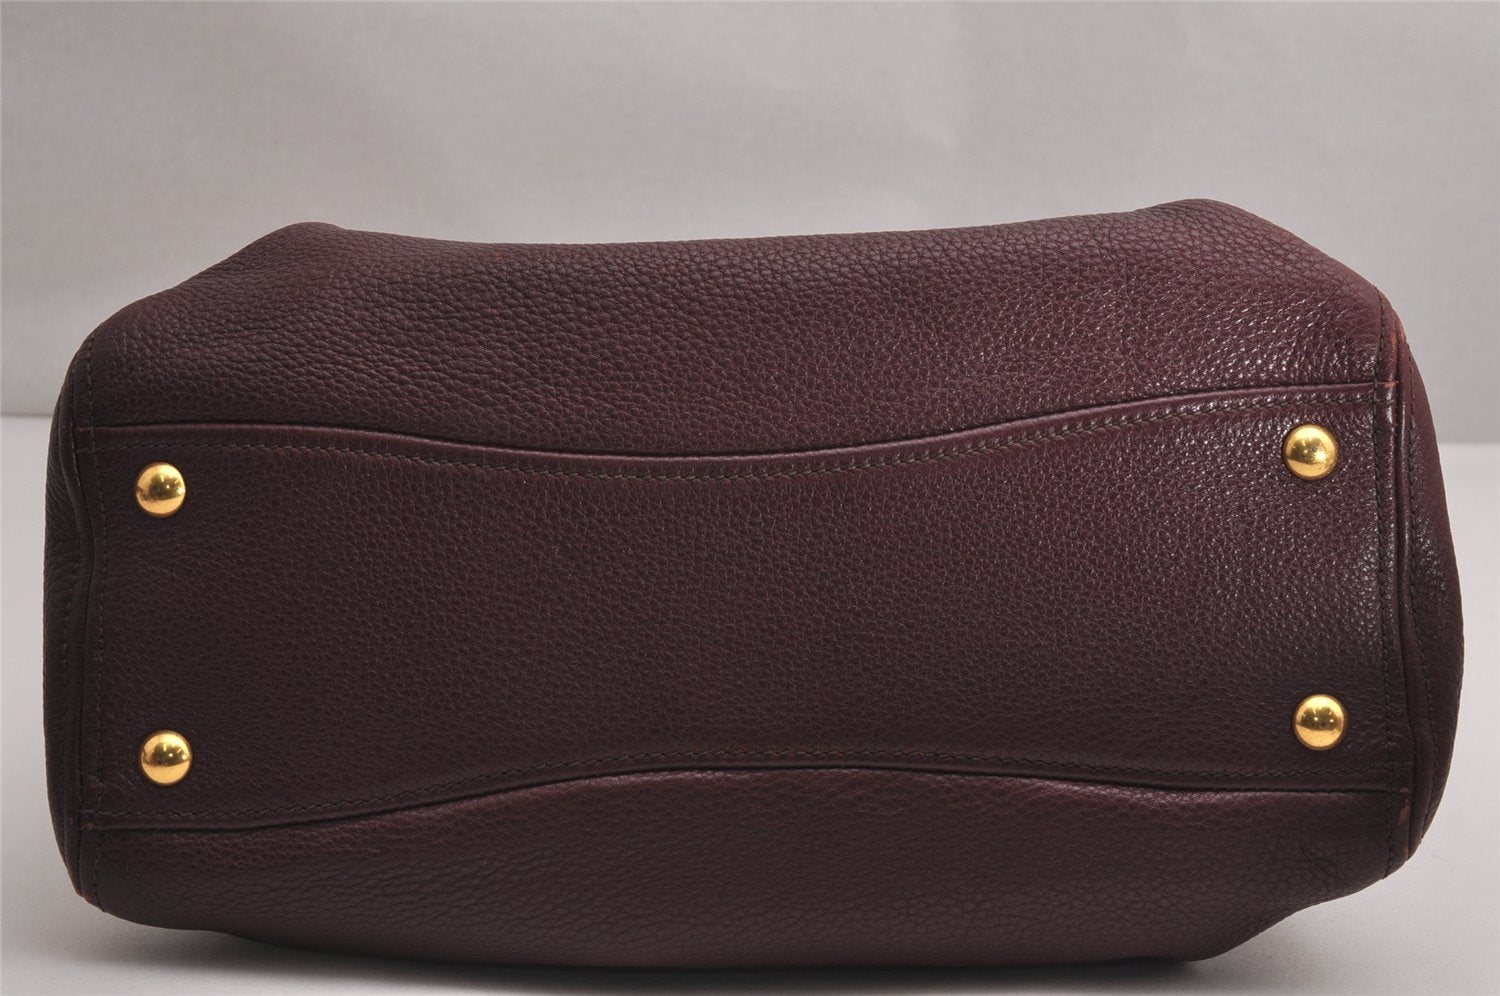 Authentic MIU MIU VITELLO DAINO Leather 2Way Hand Bag RR1945 Wine Red 3456J